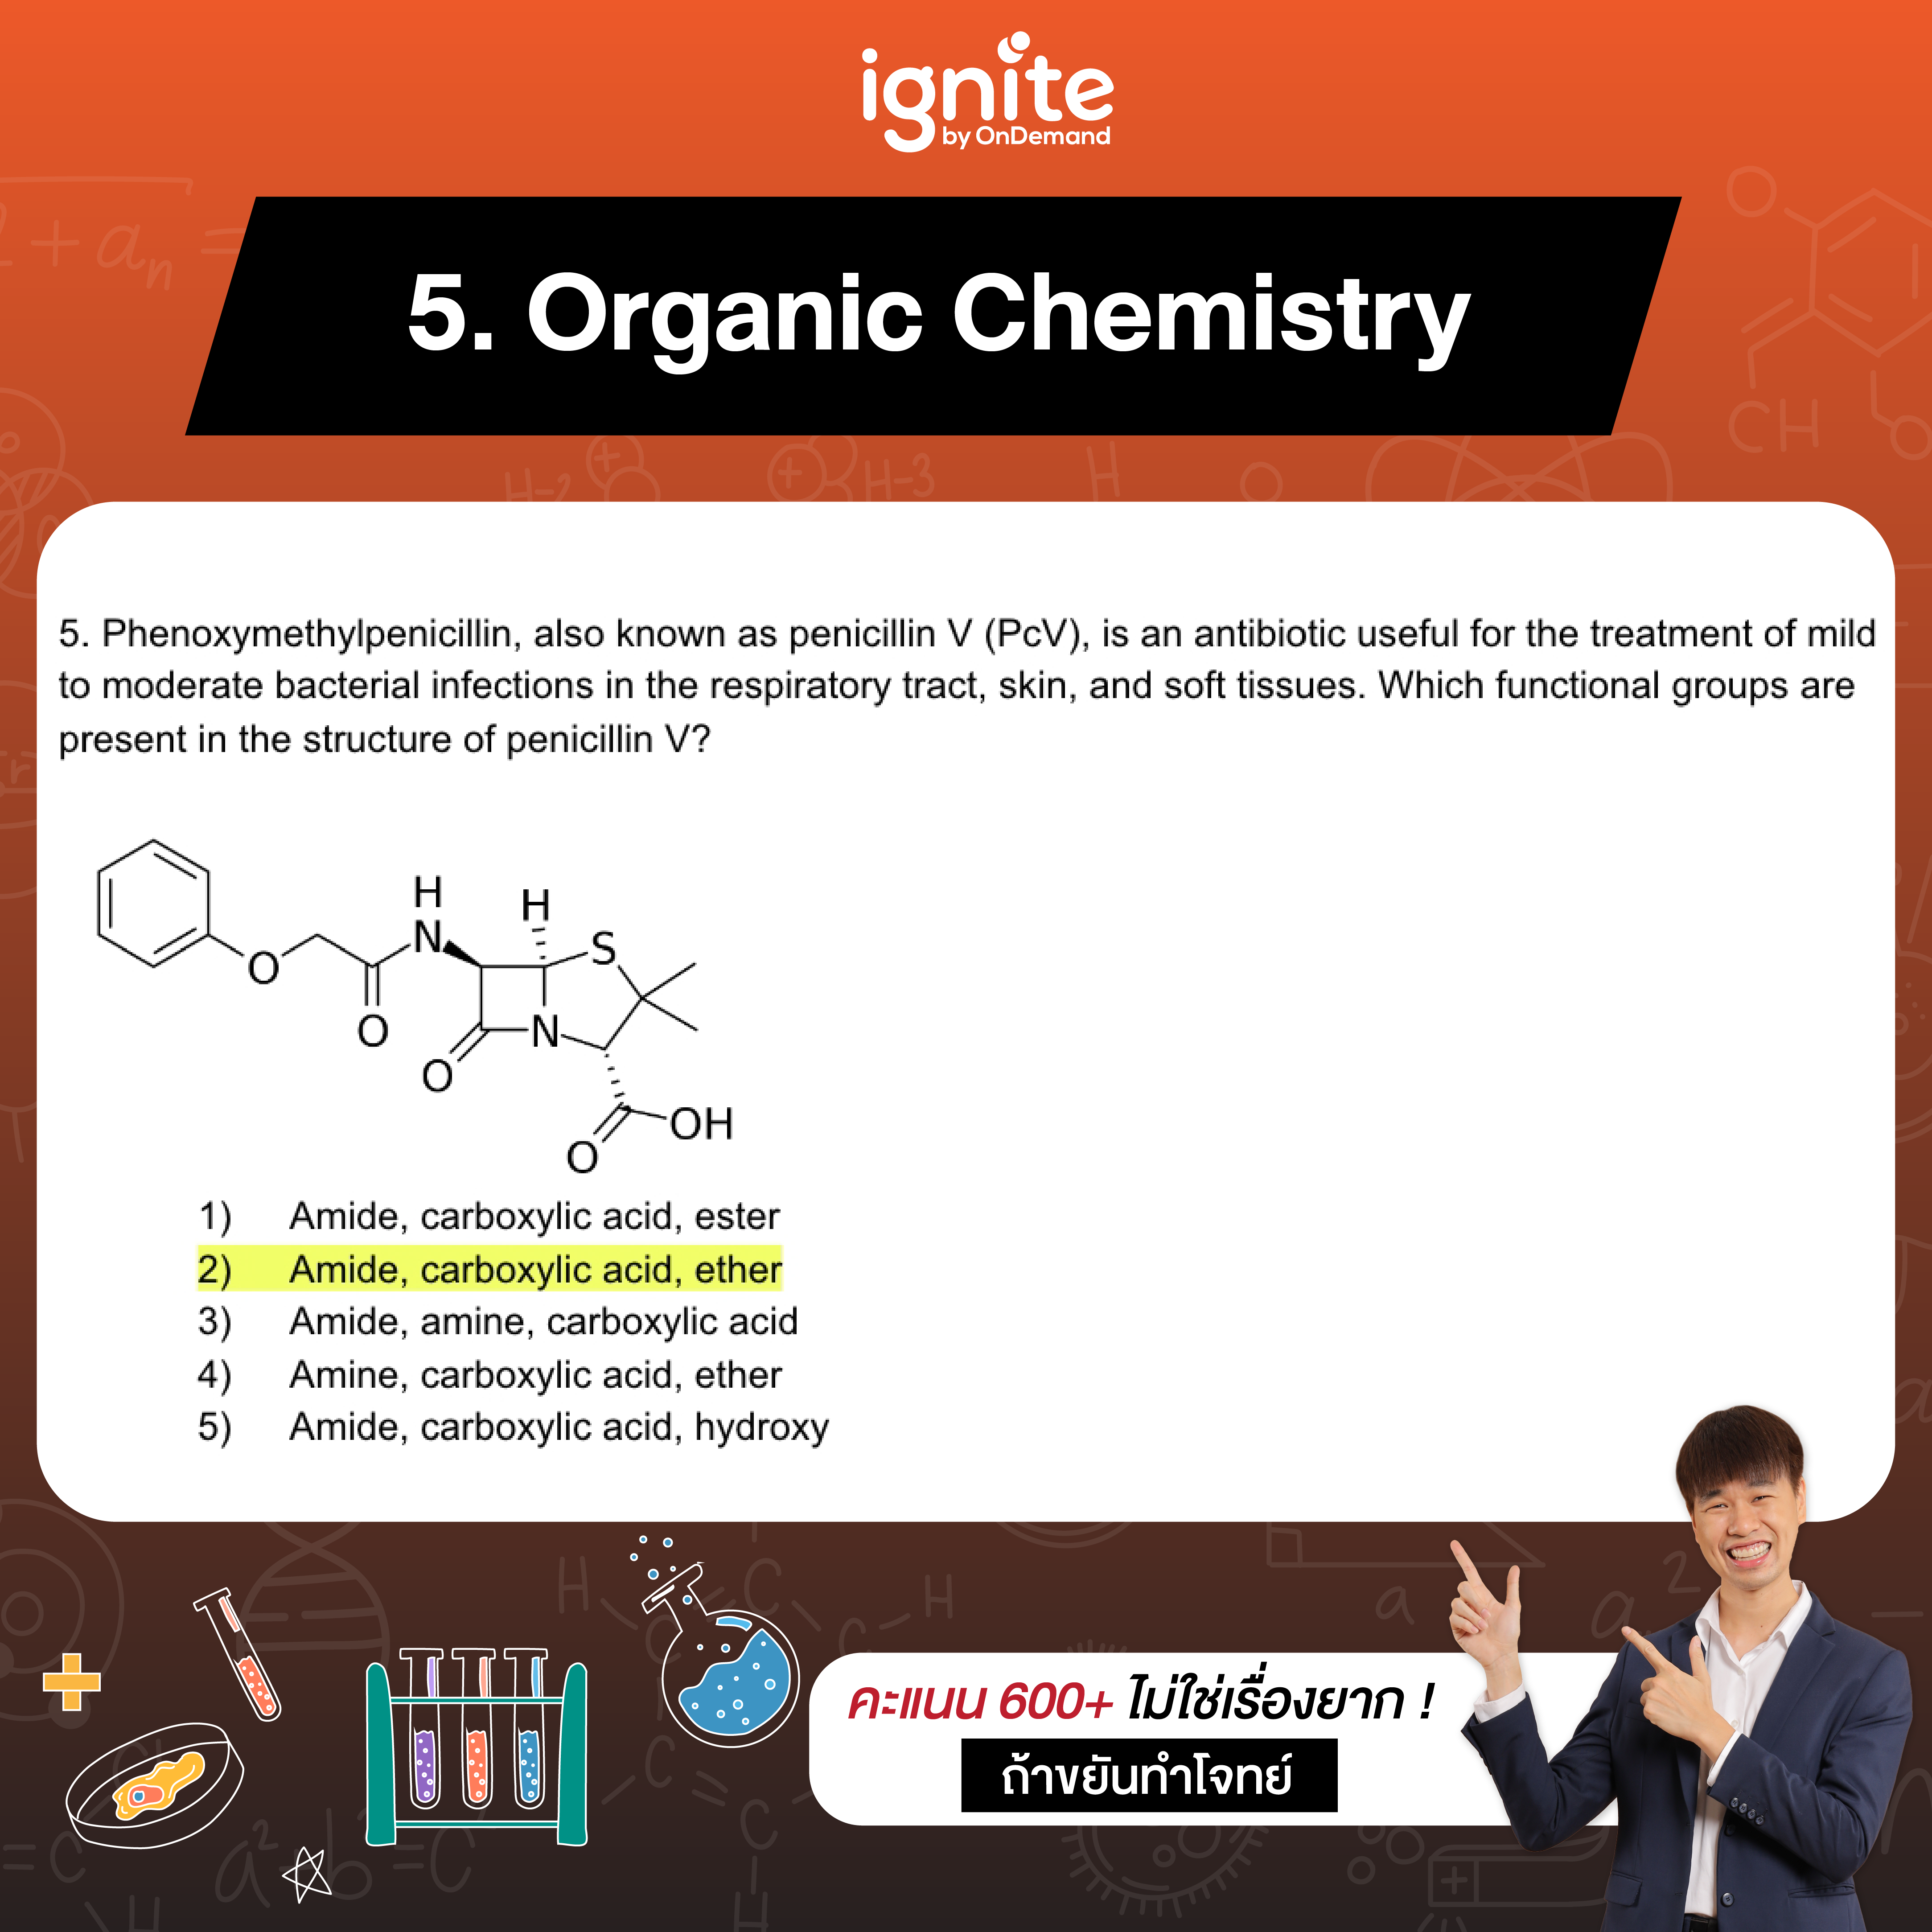 Organic Chemistry CU-ATS - Chemistry - Jan 2023 - ignite by OnDemand